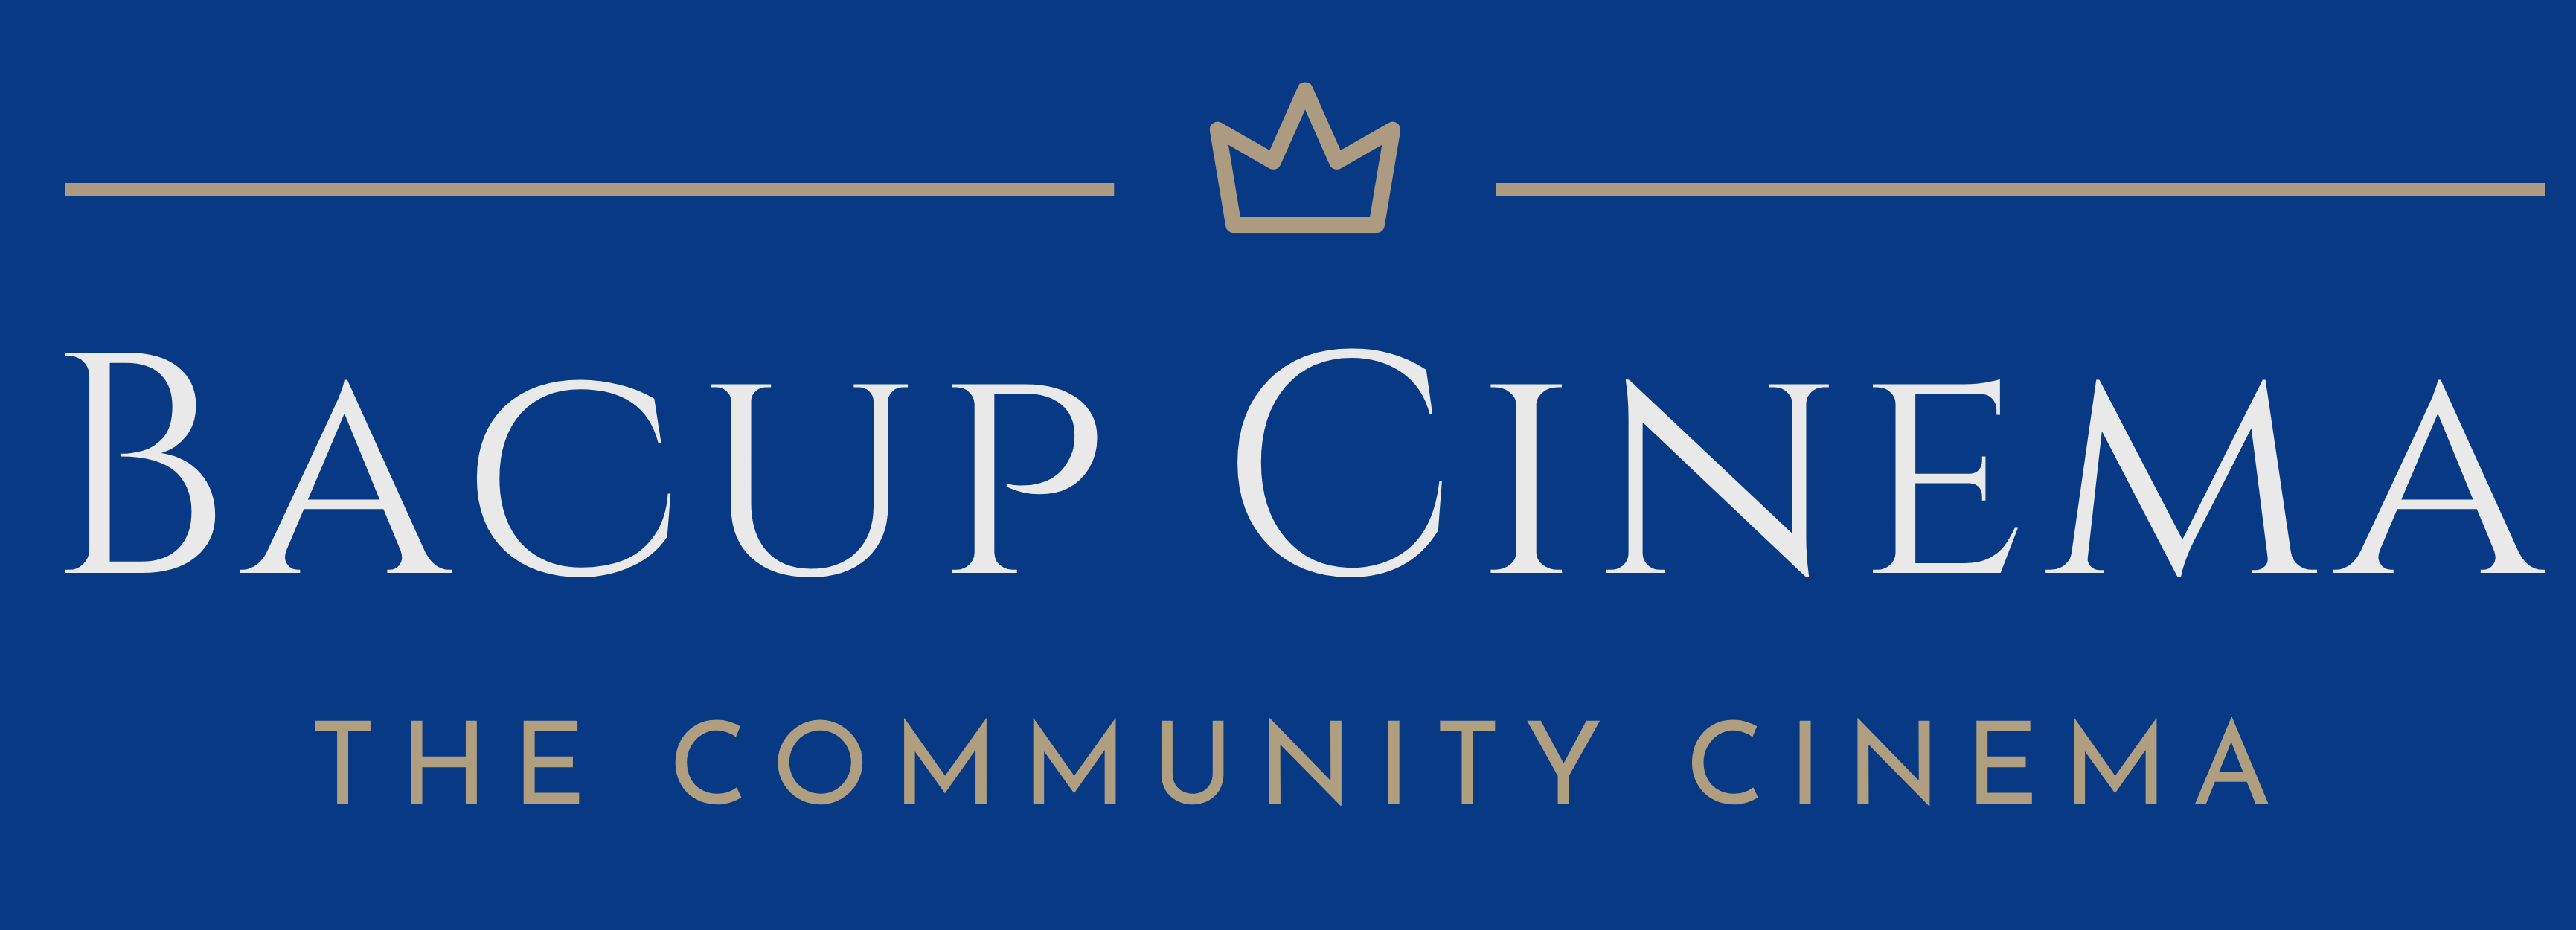 Bacup community Cinema logo